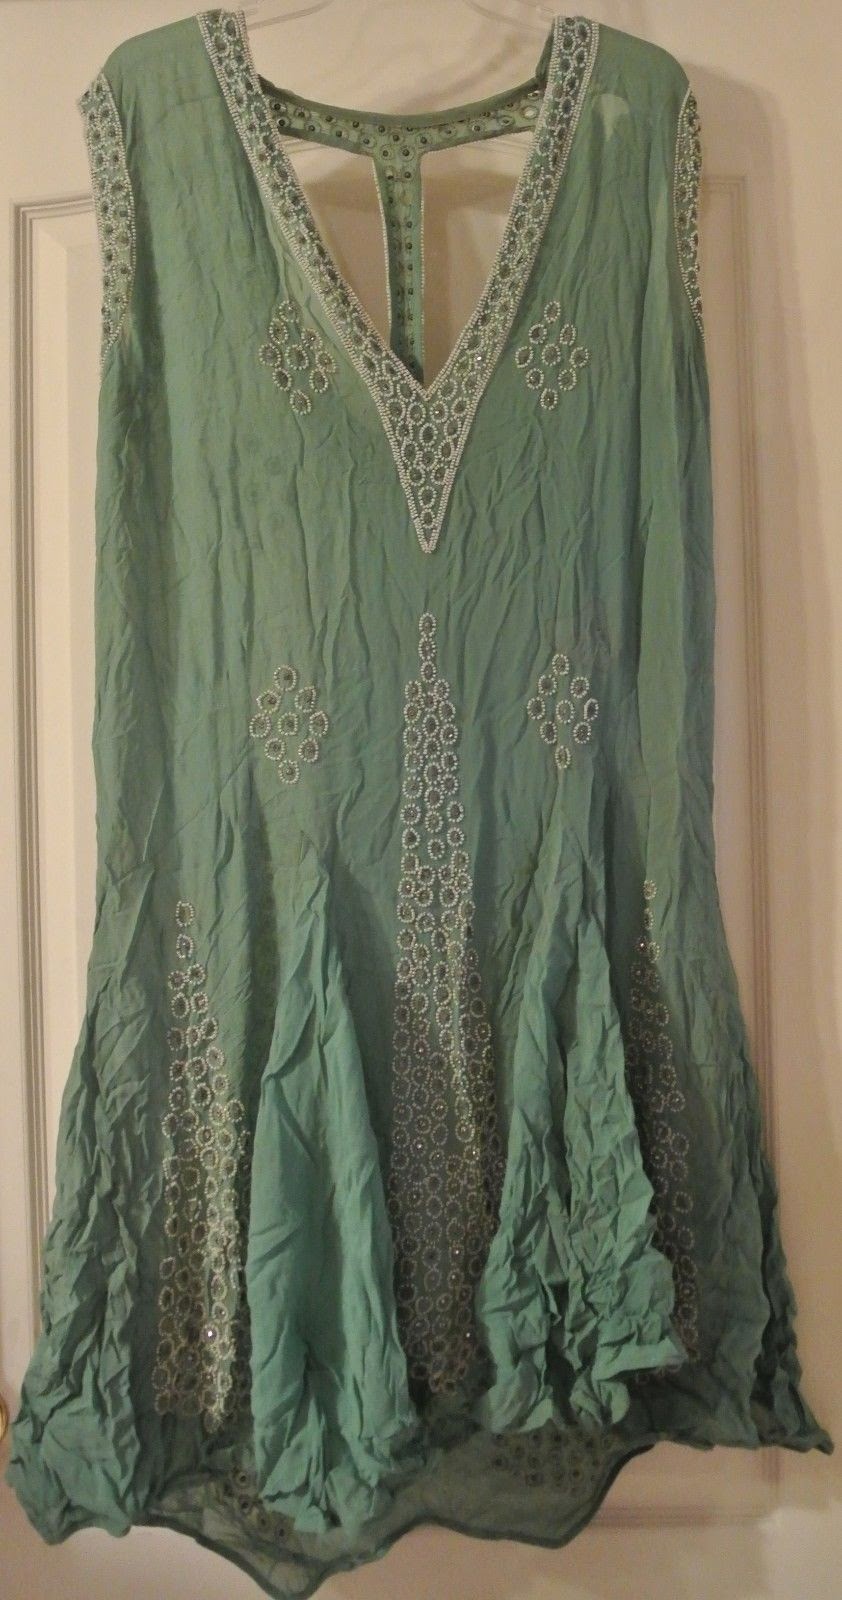 All The Pretty Dresses: Green 1920's Dress